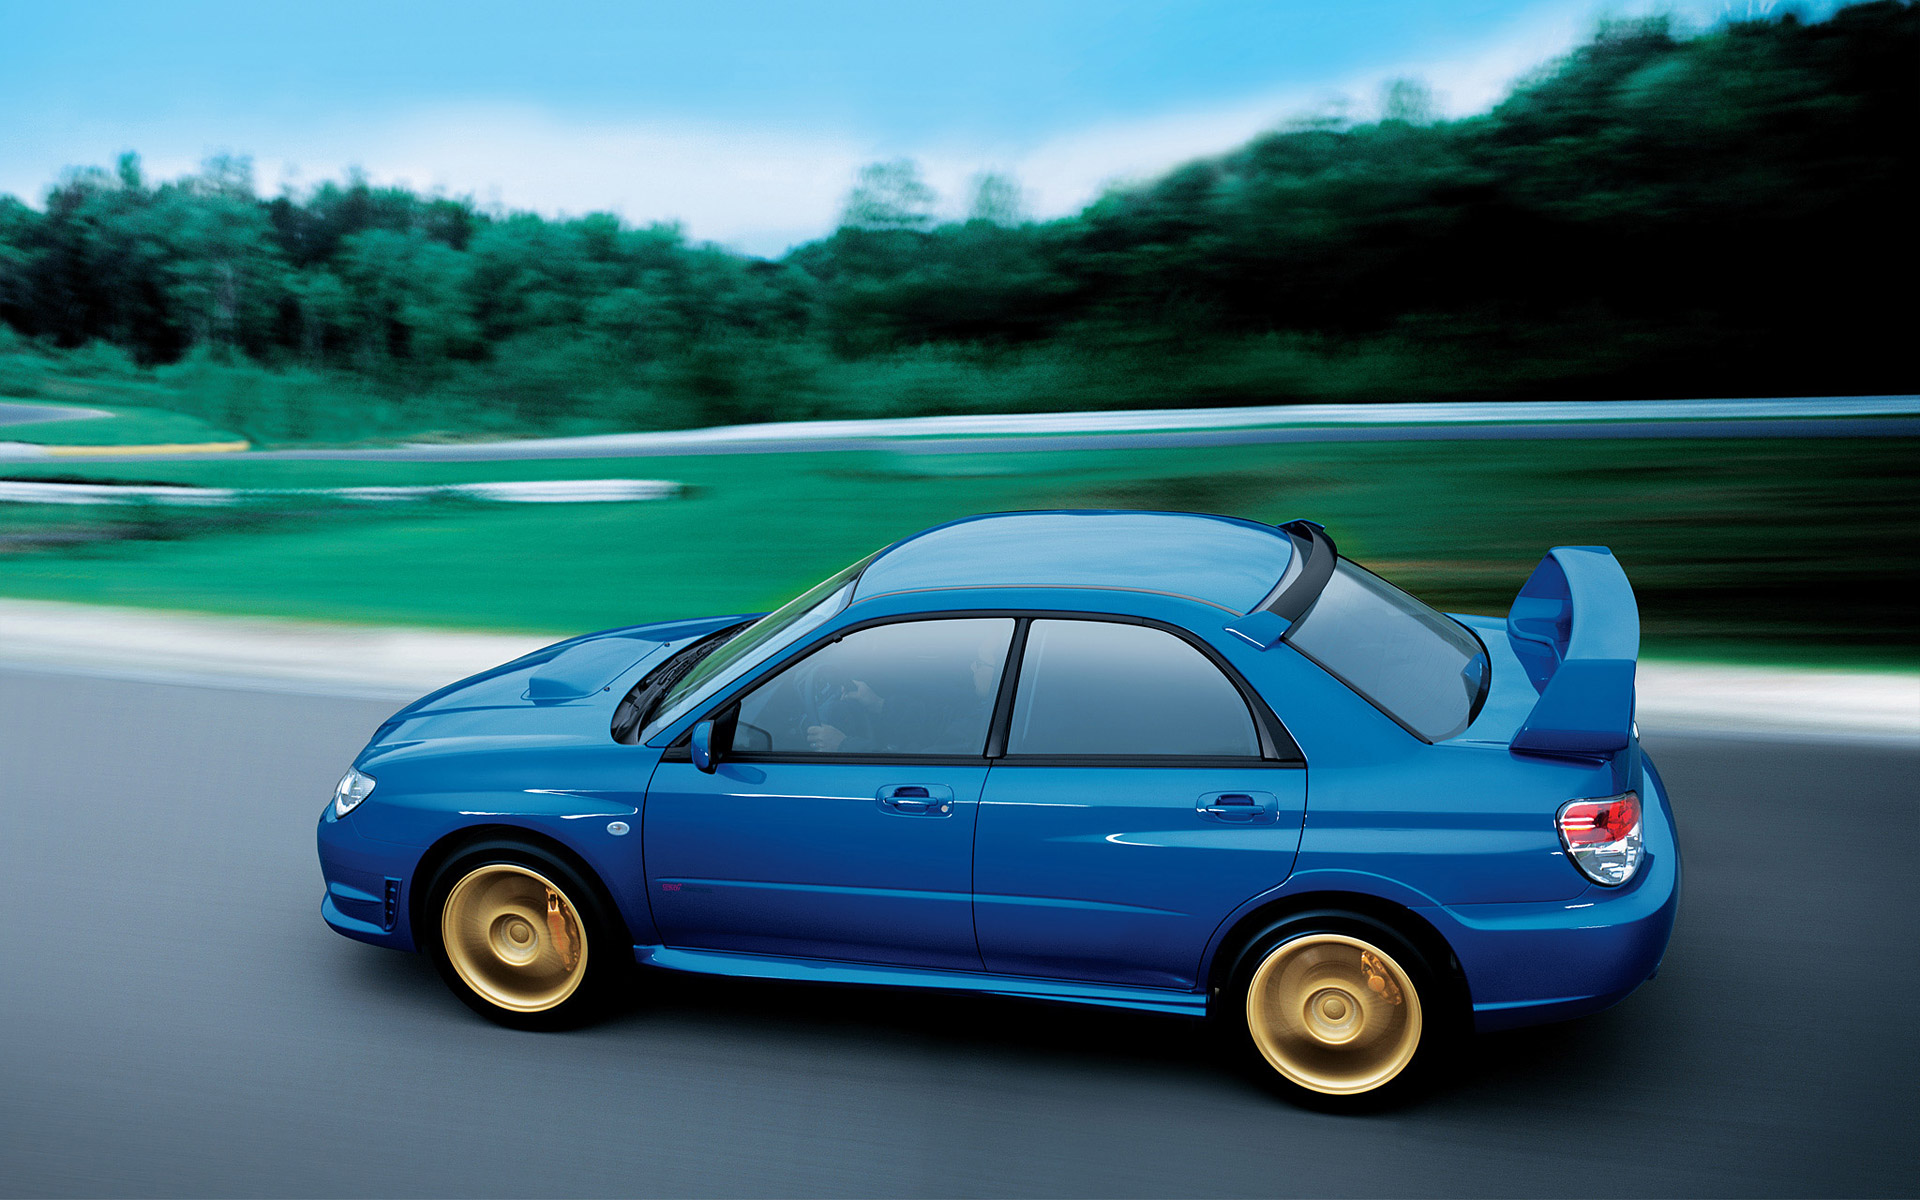  2007 Subaru Impreza WRX STI Wallpaper.